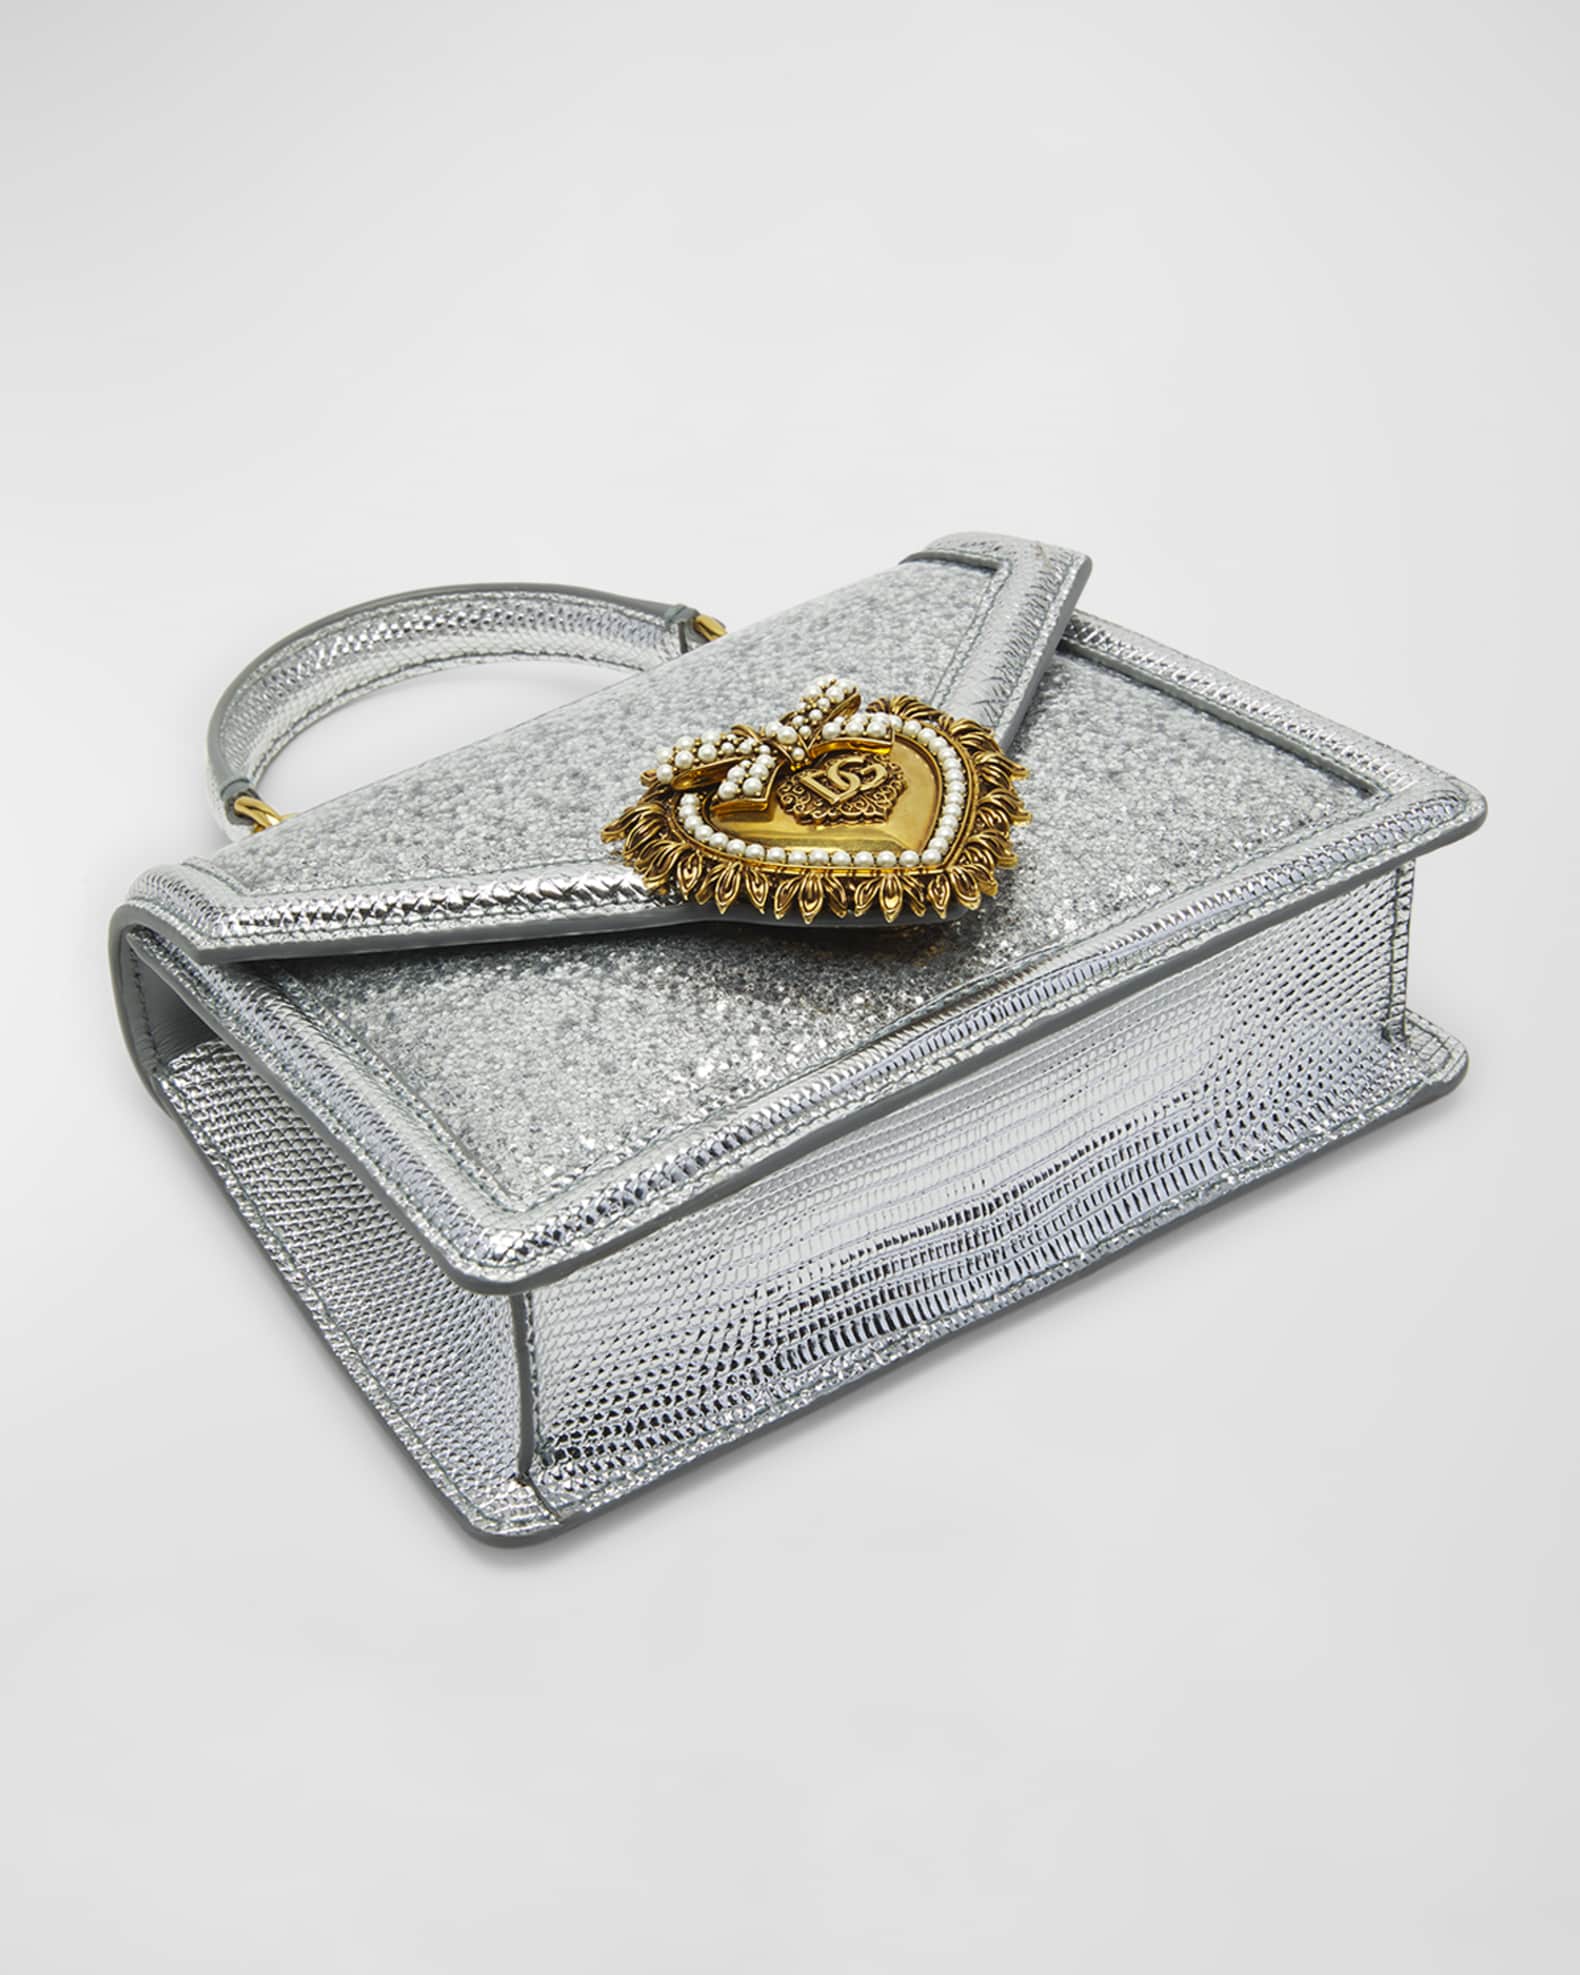 Dolce & Gabbana Devotion Mini Glitter Top-Handle Bag